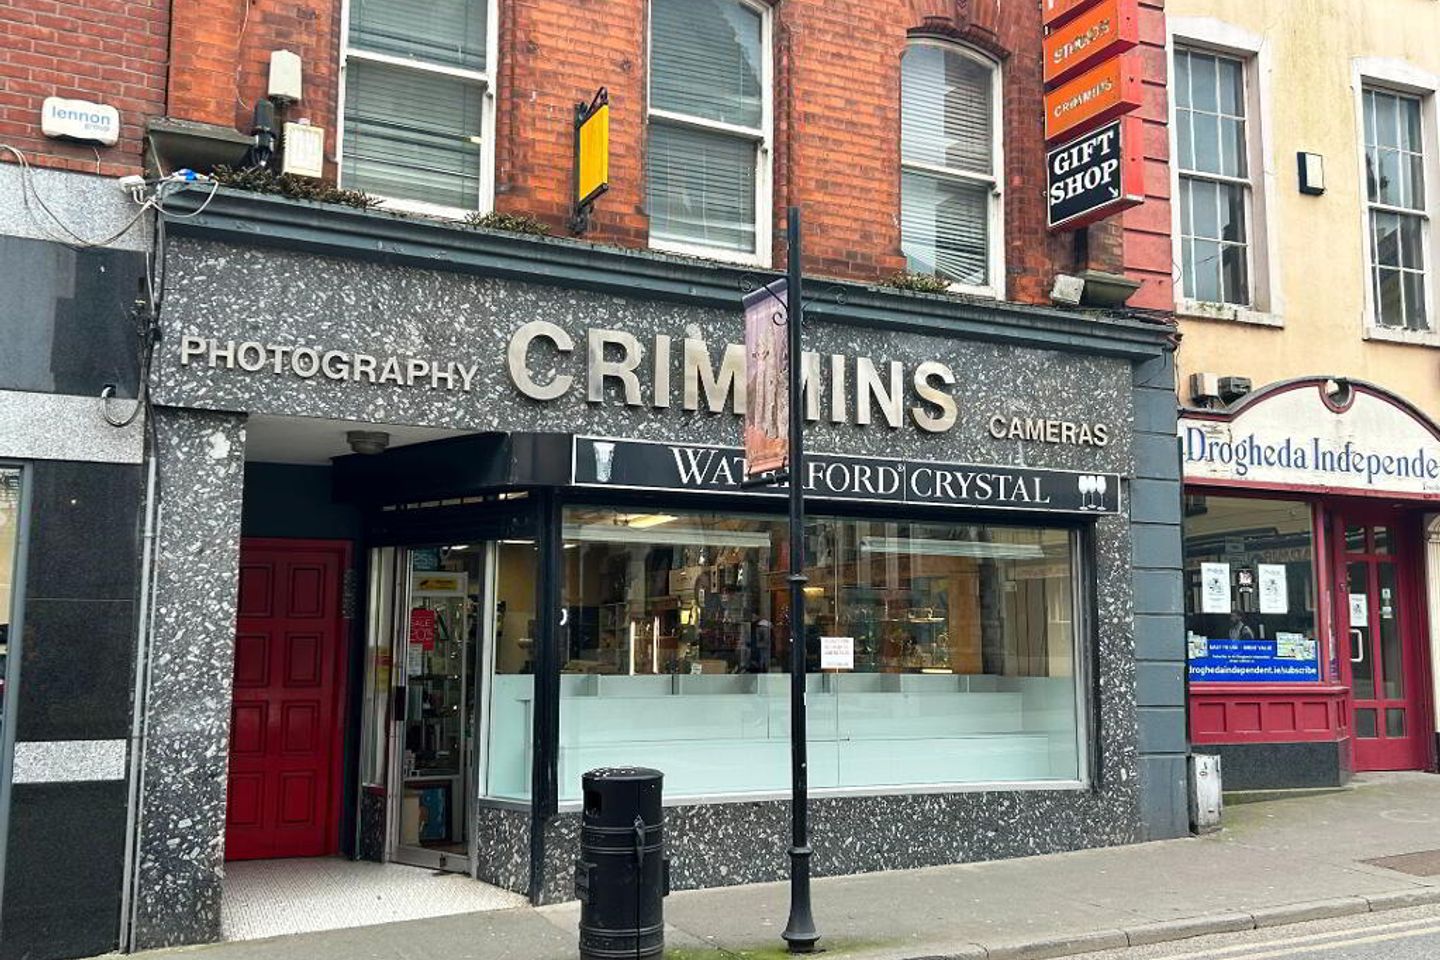 Former Crimmins Giftware, 10 Shop Street, Drogheda, Co. Louth